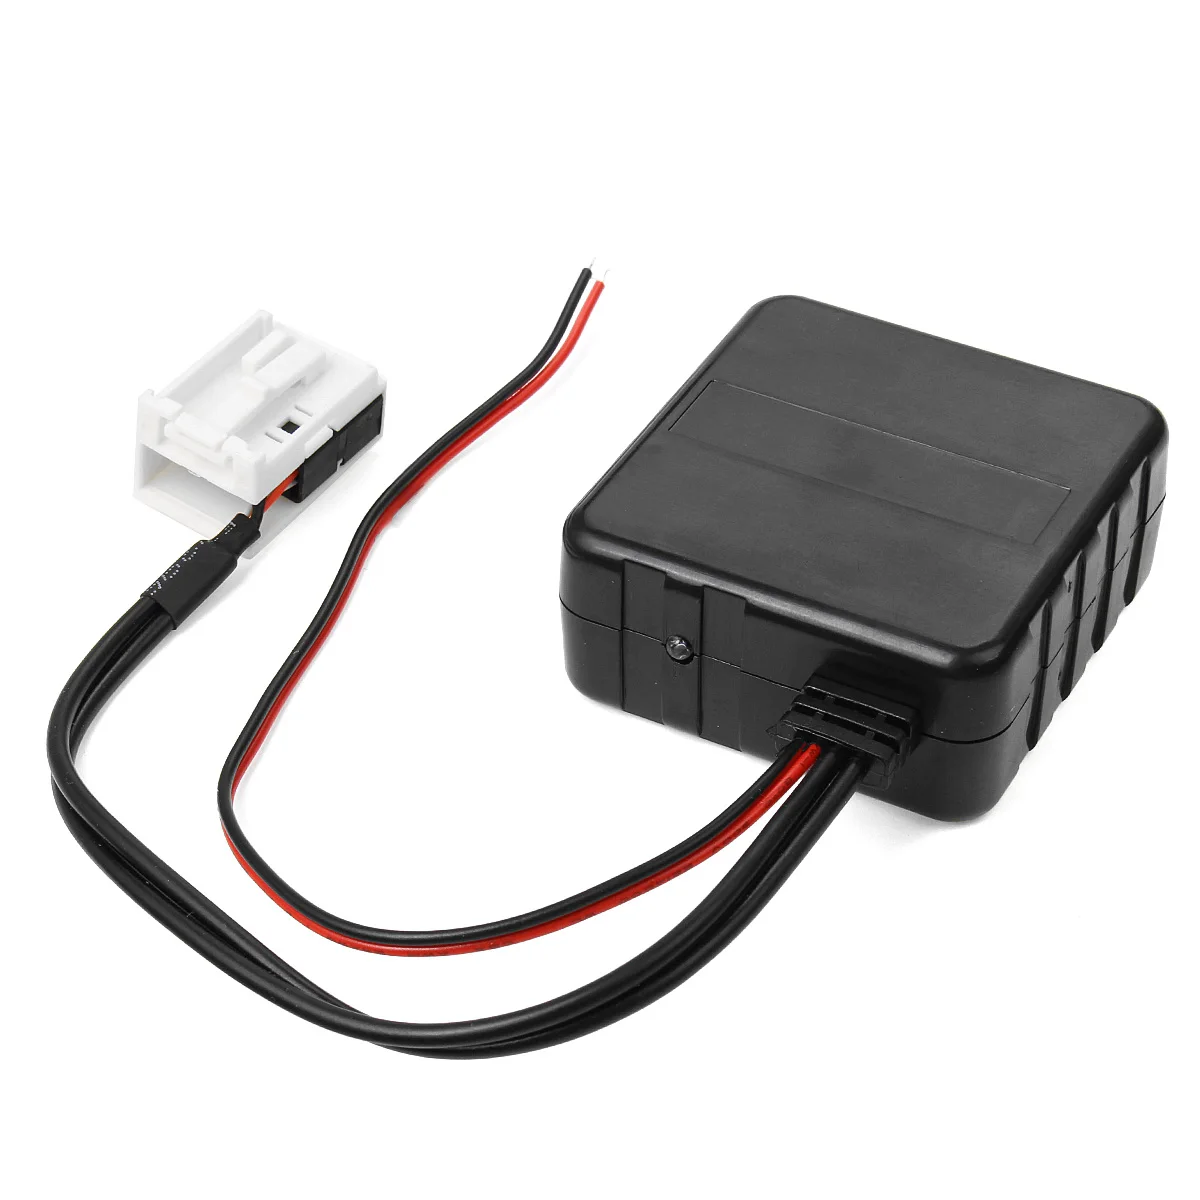 Bluetooth-Aux Receiver for Benz W169 W245 W203 W209 W164 Kabel-Adapter Hifi Kvalitet til Mercedes Wireless Aux Interface